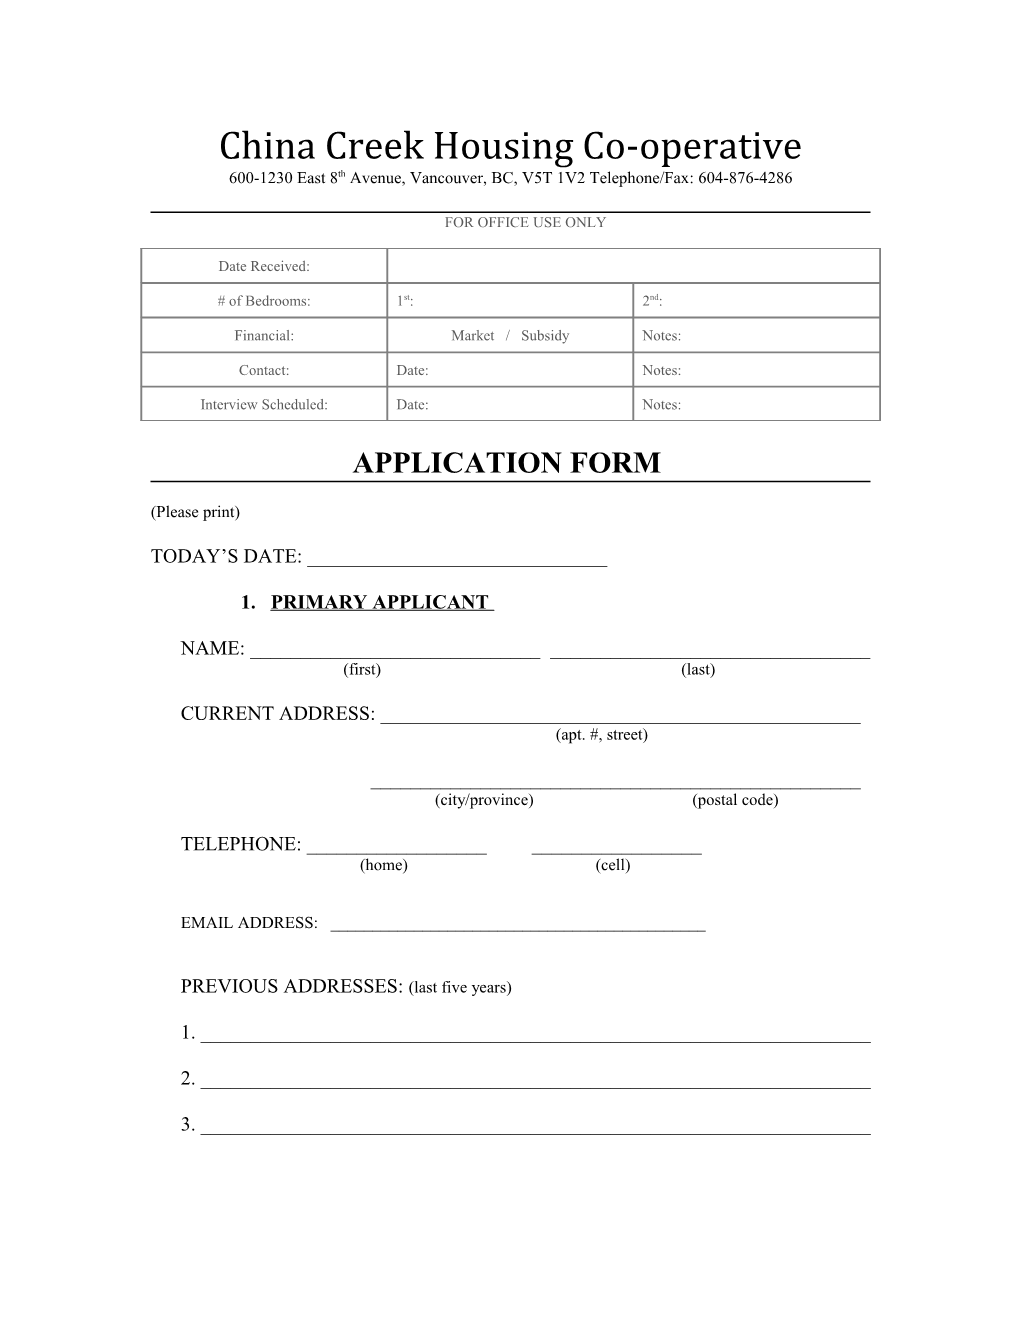 China Creek Housing Co-Operative Application Form